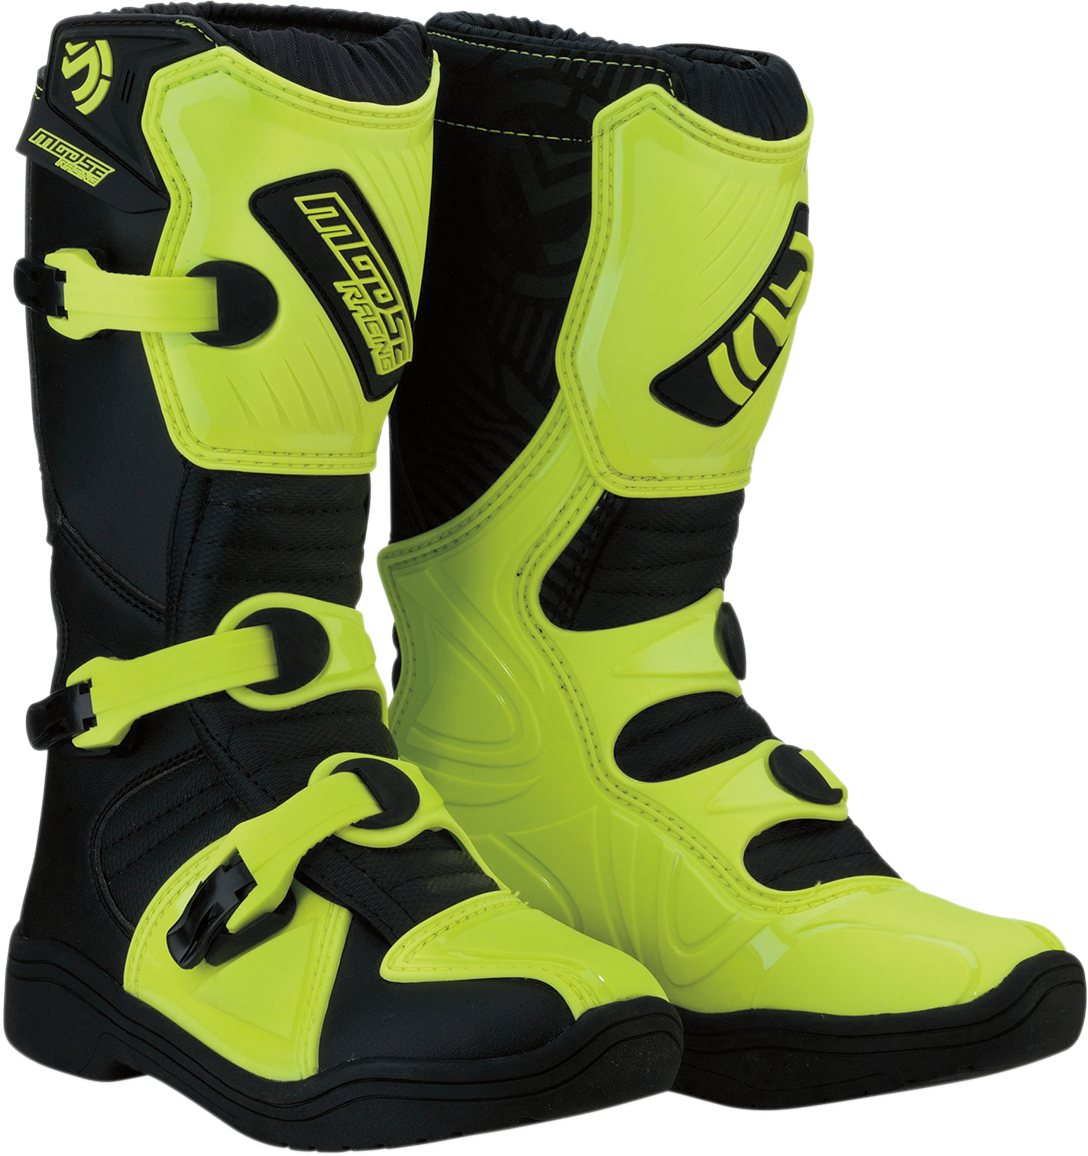 MOOSE RACING M1.3 Boots - Black/Hi-Viz Yellow - Size 6 3411-0449